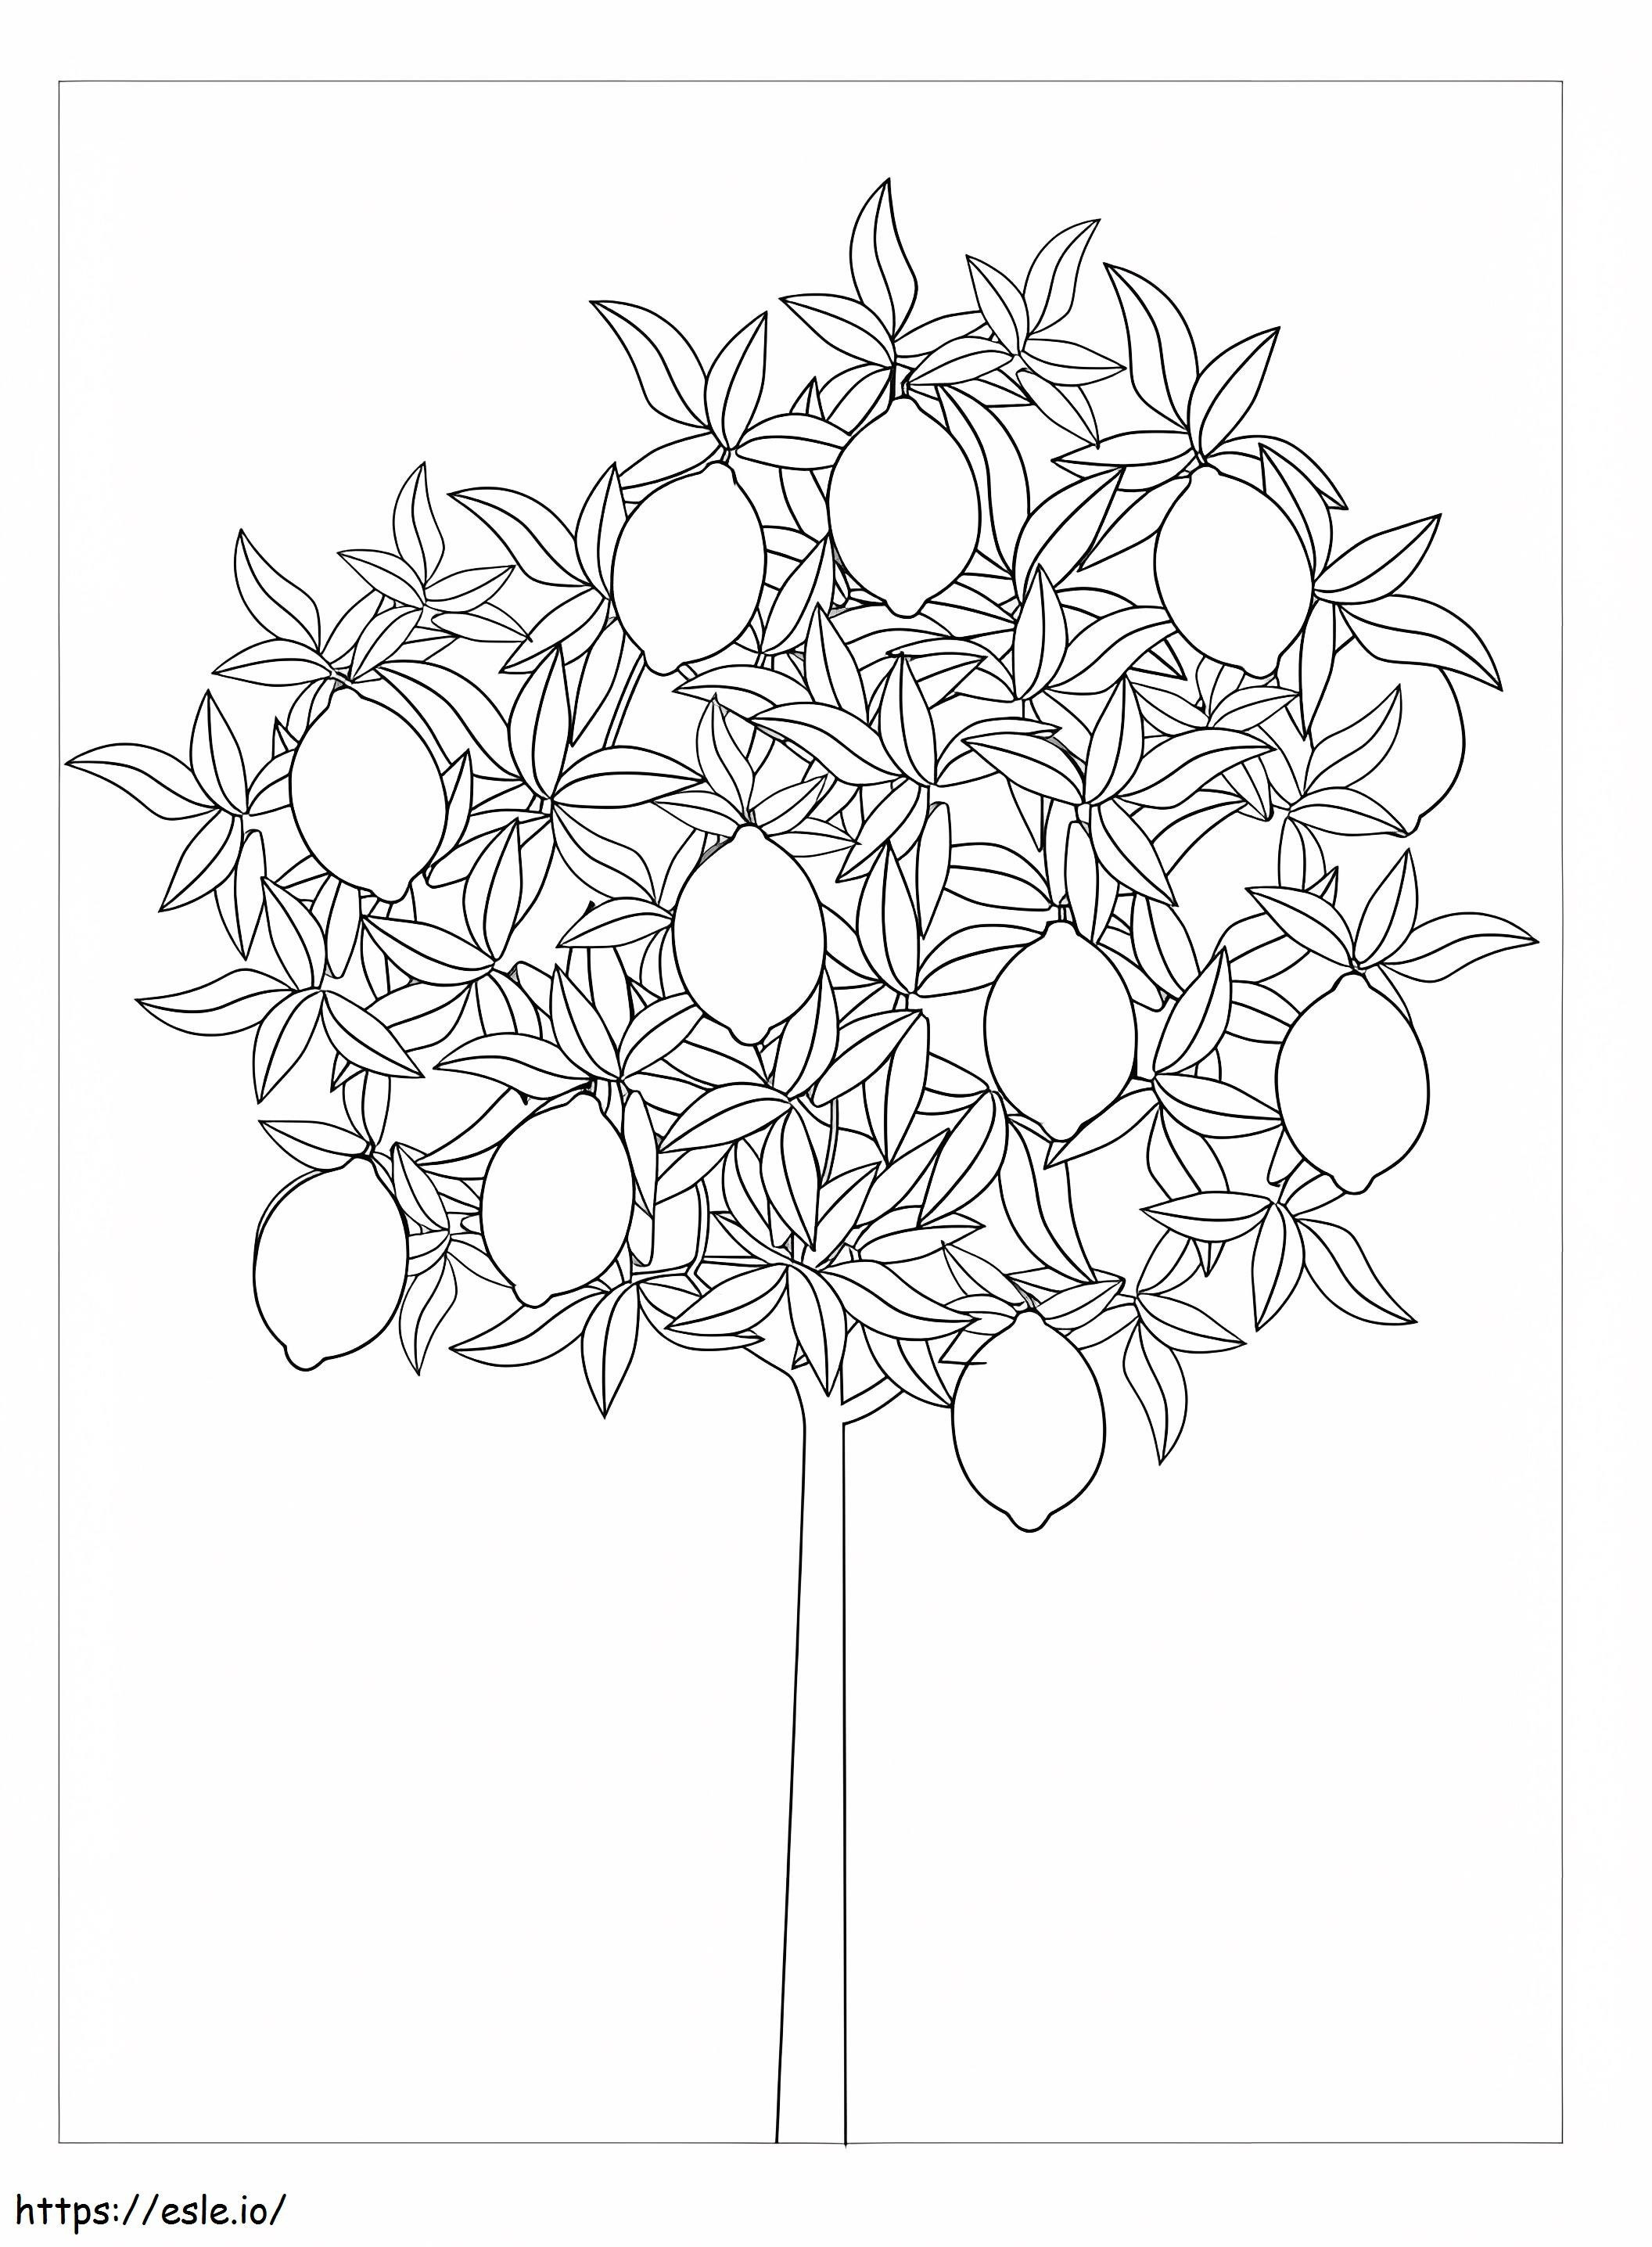 Lemon Tree coloring page